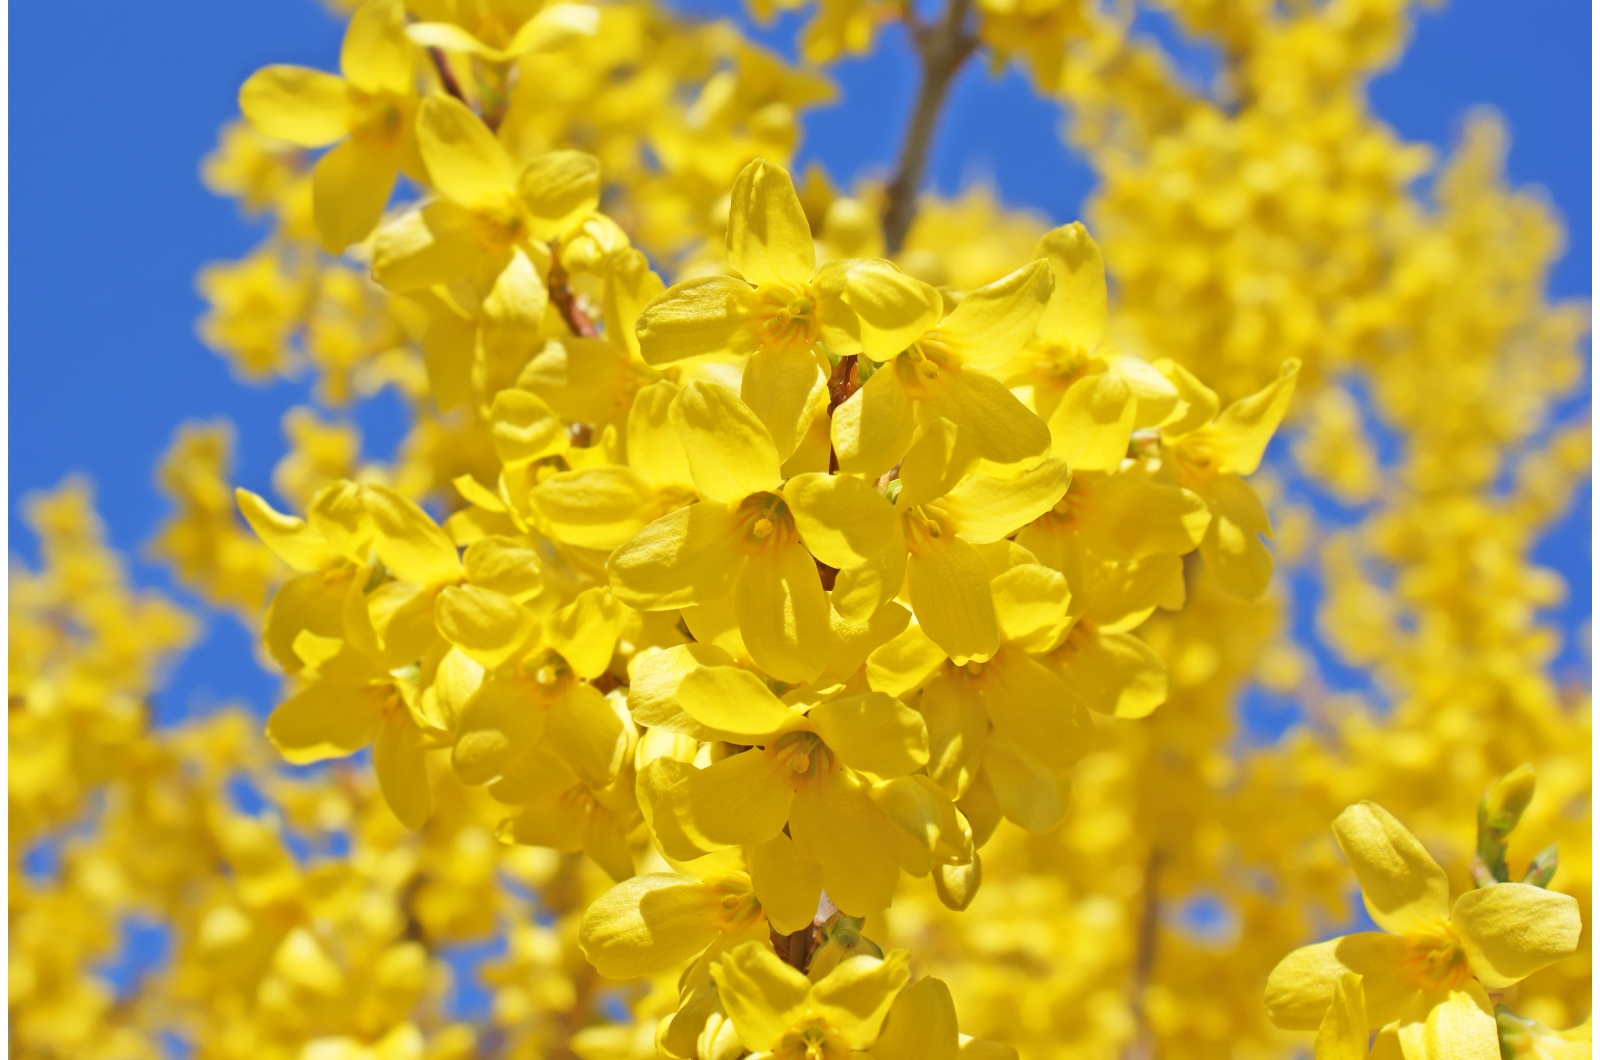 forsythia yellow bloom